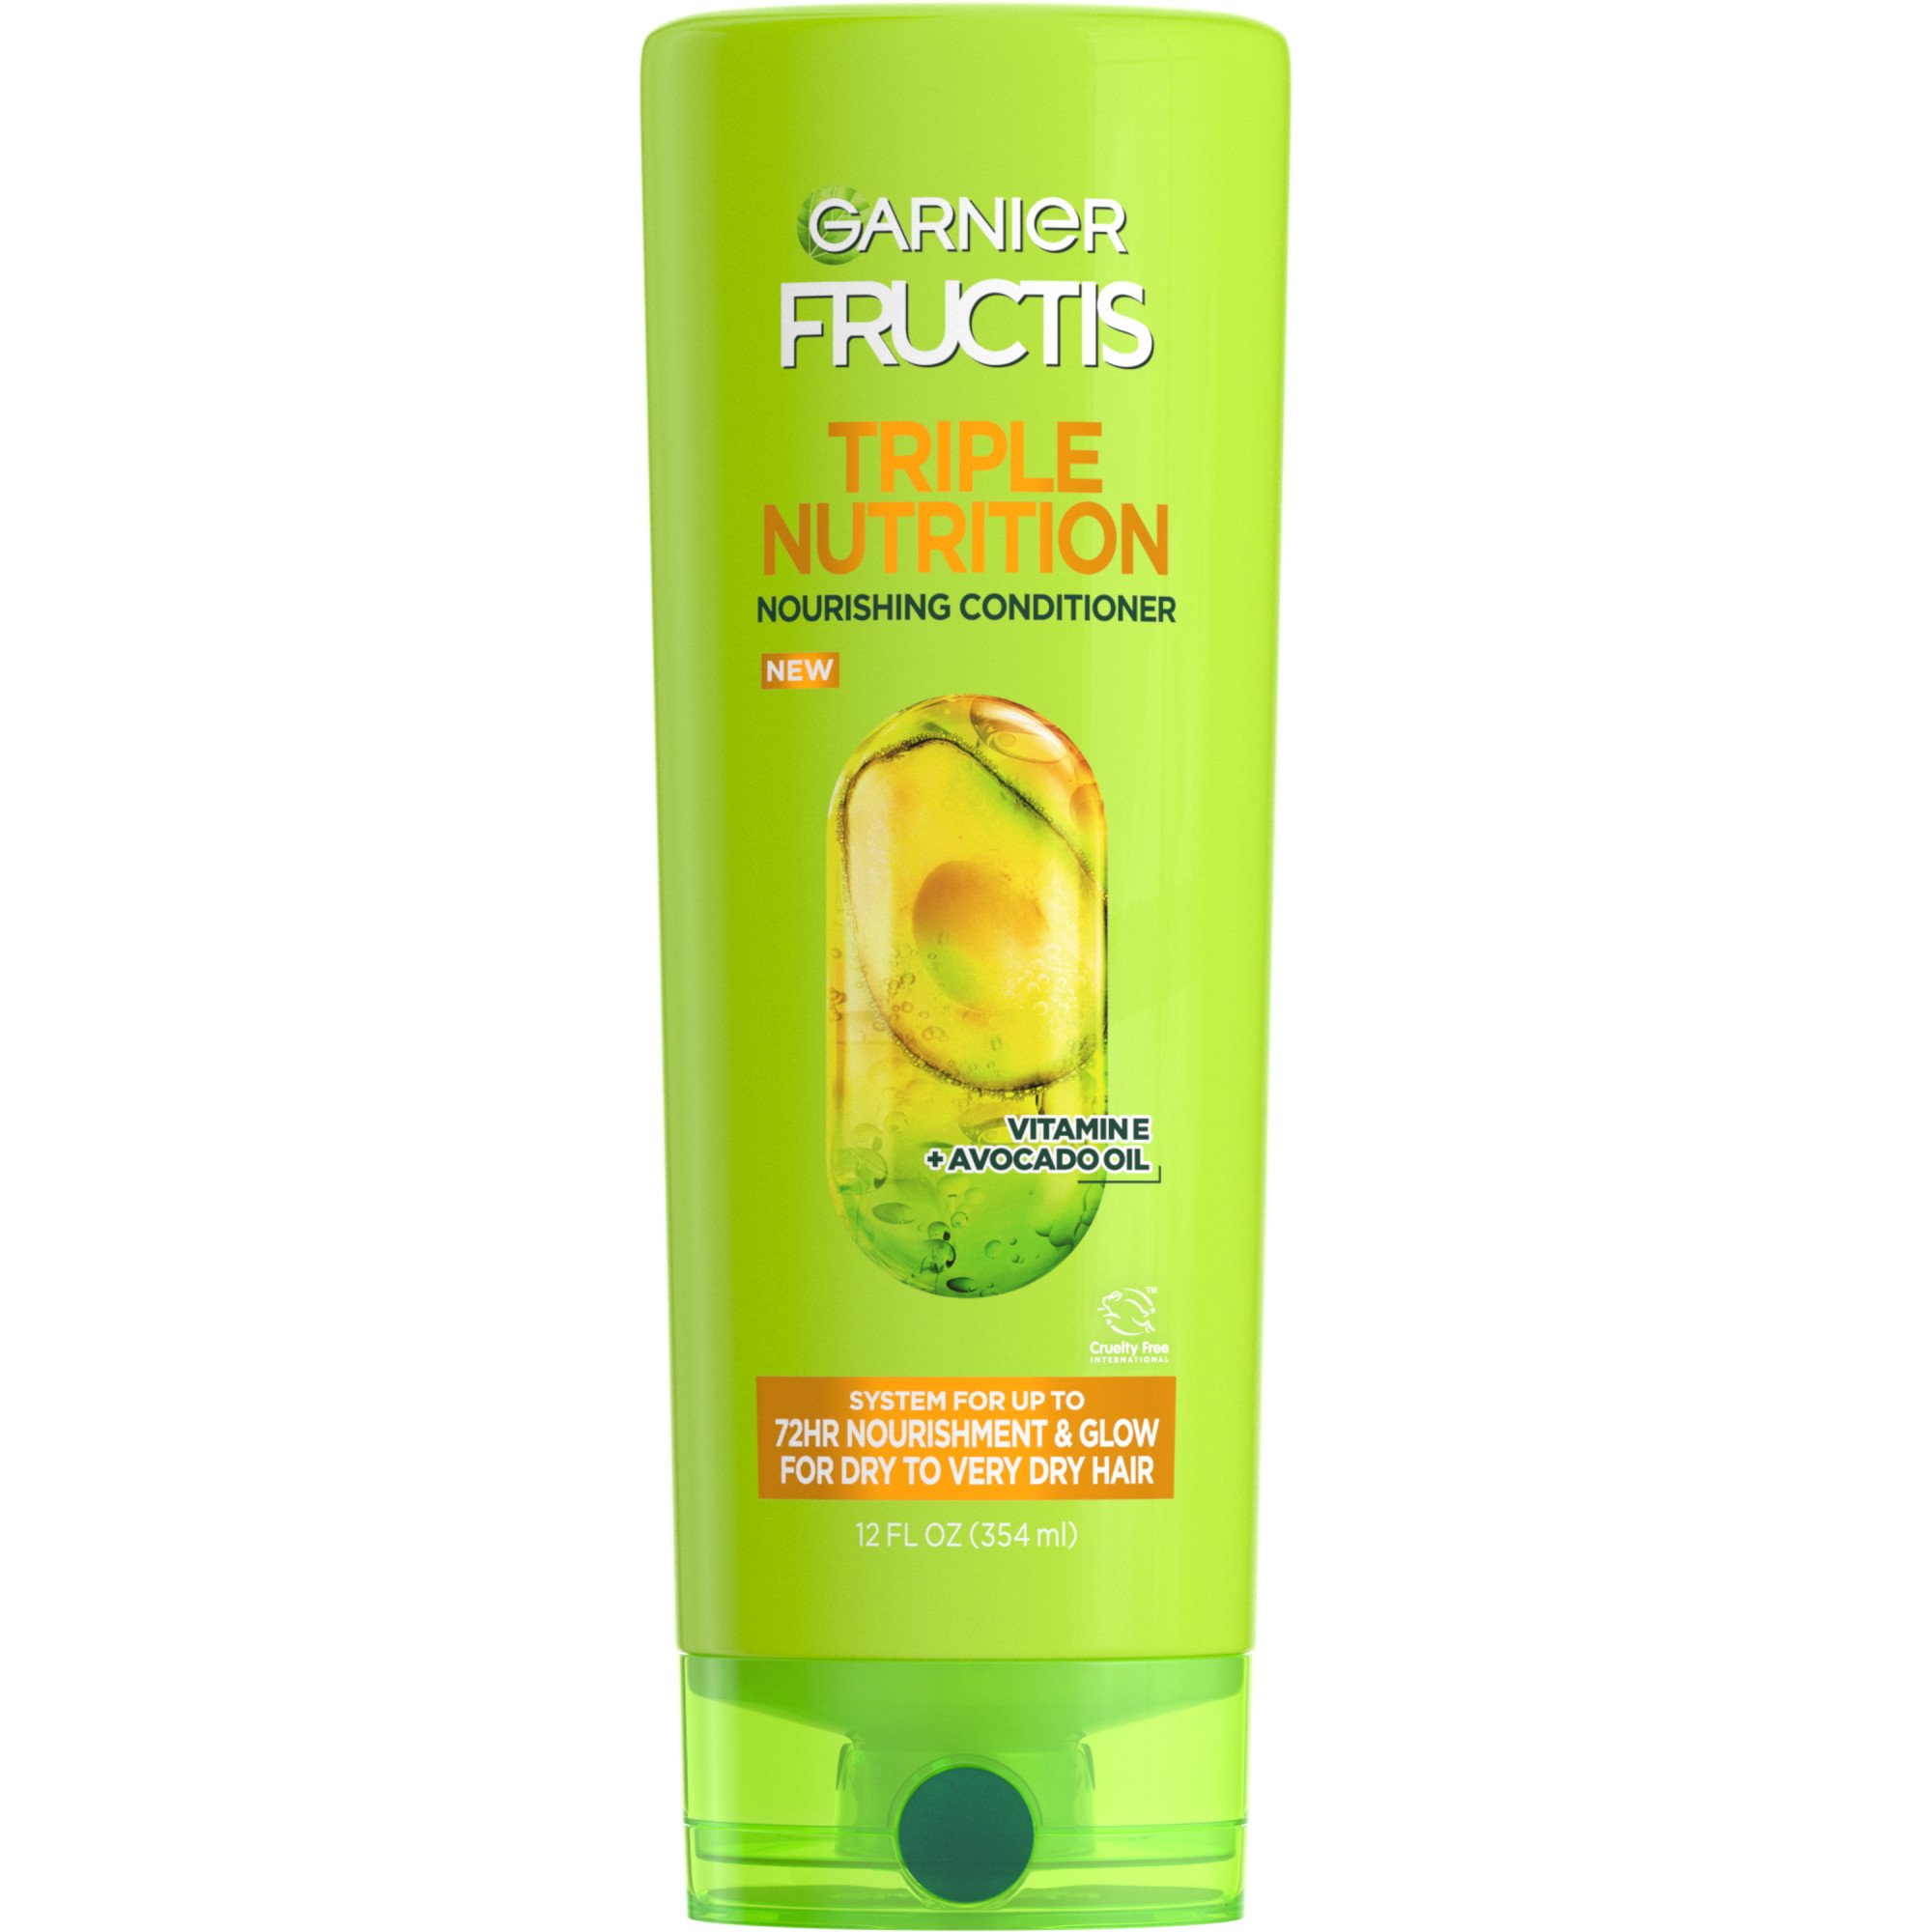 Garnier Fructis Shampoo at Shop Conditioner & Triple H-E-B Conditioner - Nutrition